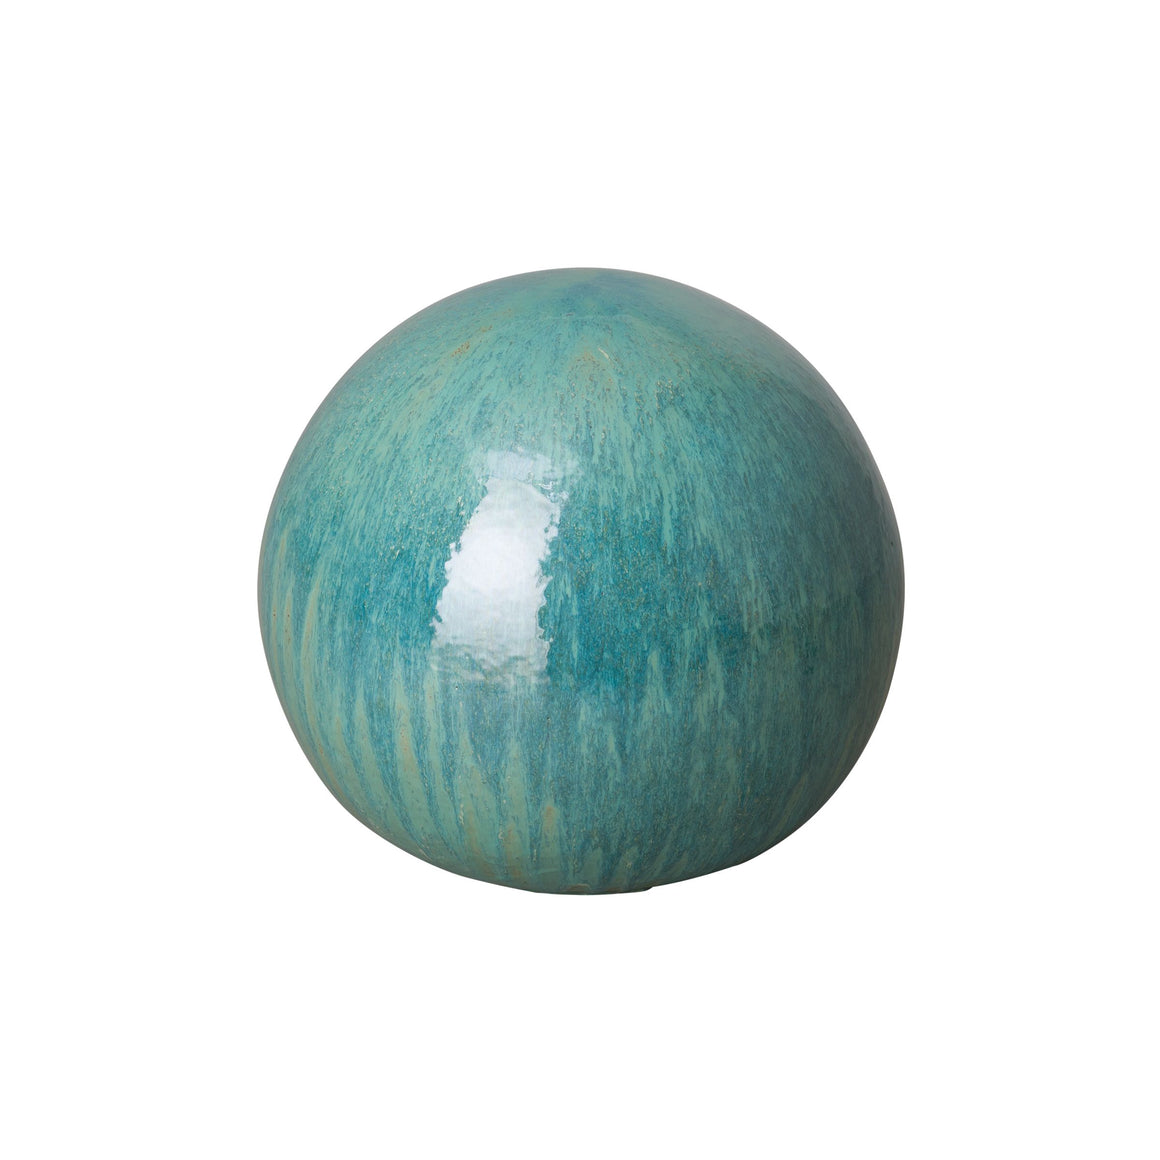 Landscape Gazing Ball - 20 inch Aruba Blue Glaze